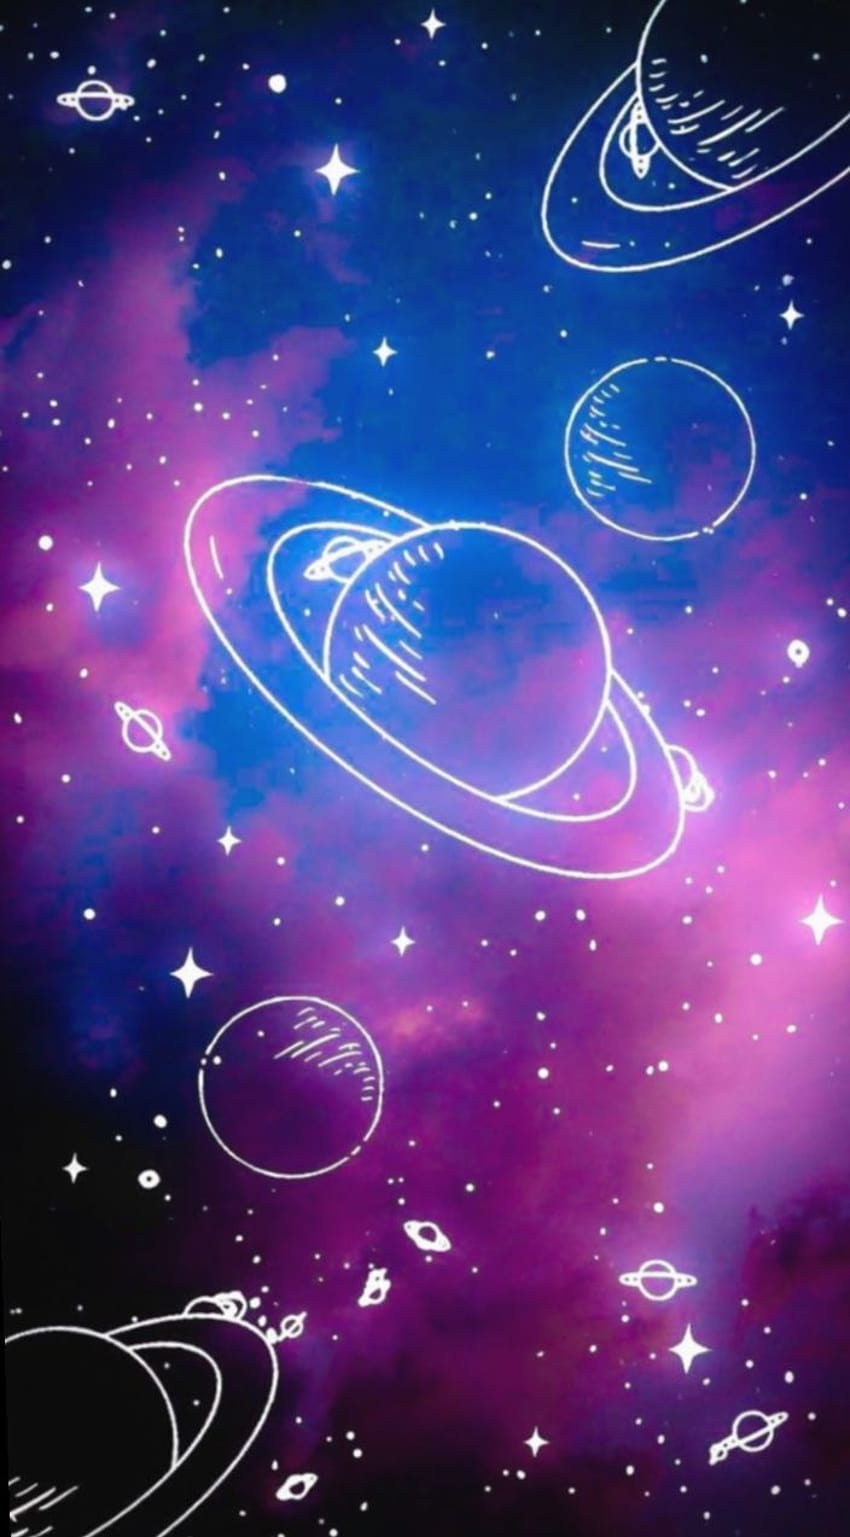 Galaxy Space background universe magic sky nebula night purple cosmos.  Cosmic galaxy wallpaper blue color star dust. Blue texture abstract galaxy  infinite future dark deep light 12260687 Stock Photo at Vecteezy